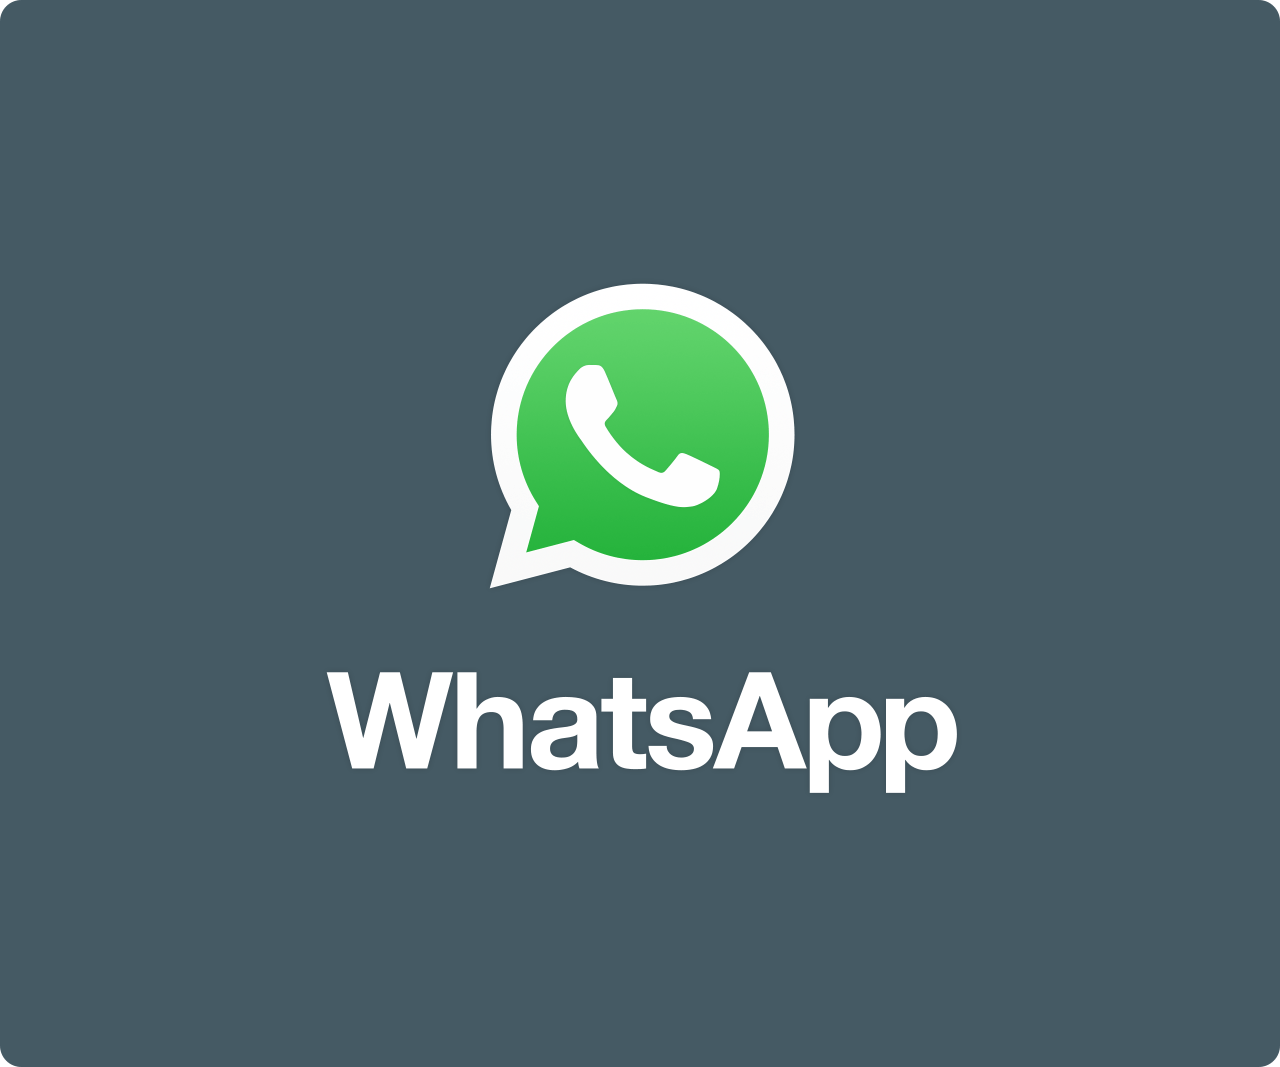 Green Colored Company Logo - WhatsApp Brand Resources